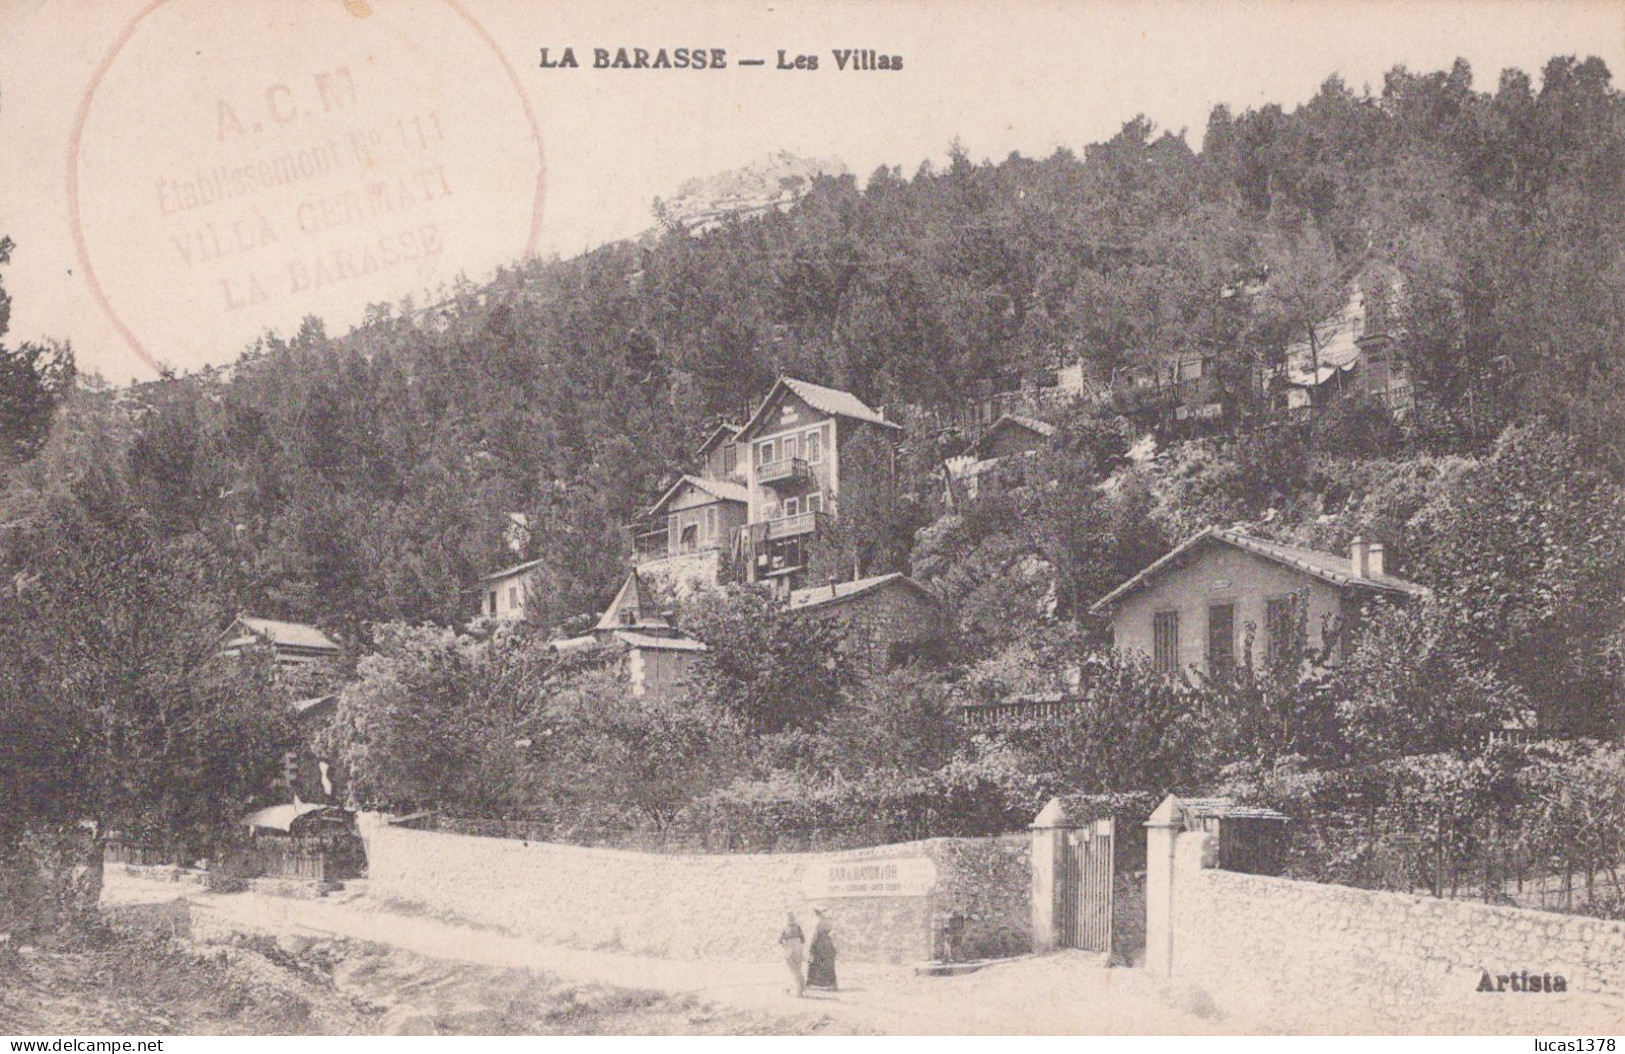 13 / MARSEILLE / LA BARASSE / LES VILLAS / VILLA GERMATI - Saint Marcel, La Barasse, Saint Menet